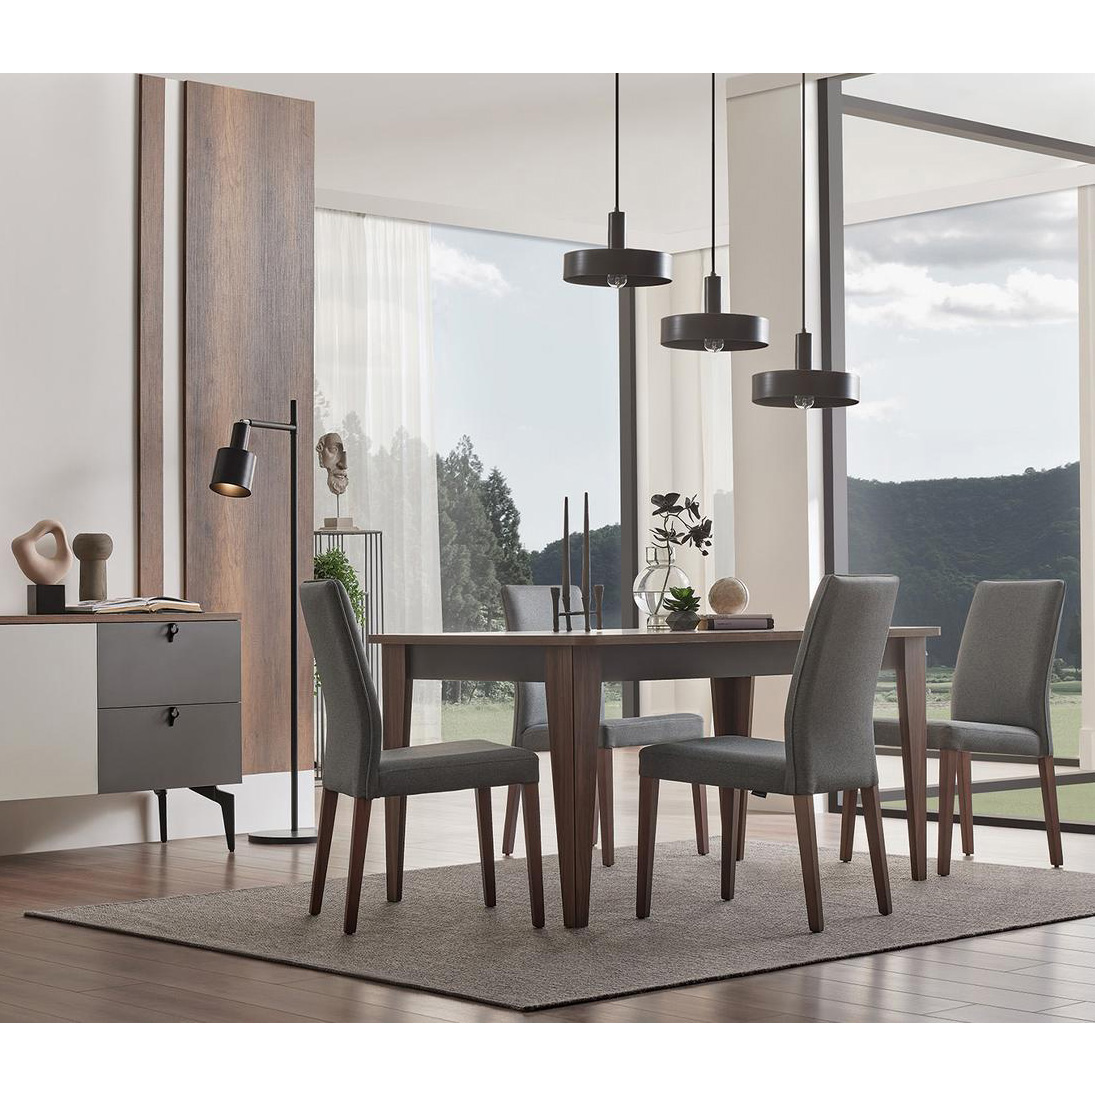 Стол обеденный Enza Home Cordell, прямоугольный, размер 160х90х76 см07.180.0600.0000.0053.0000.